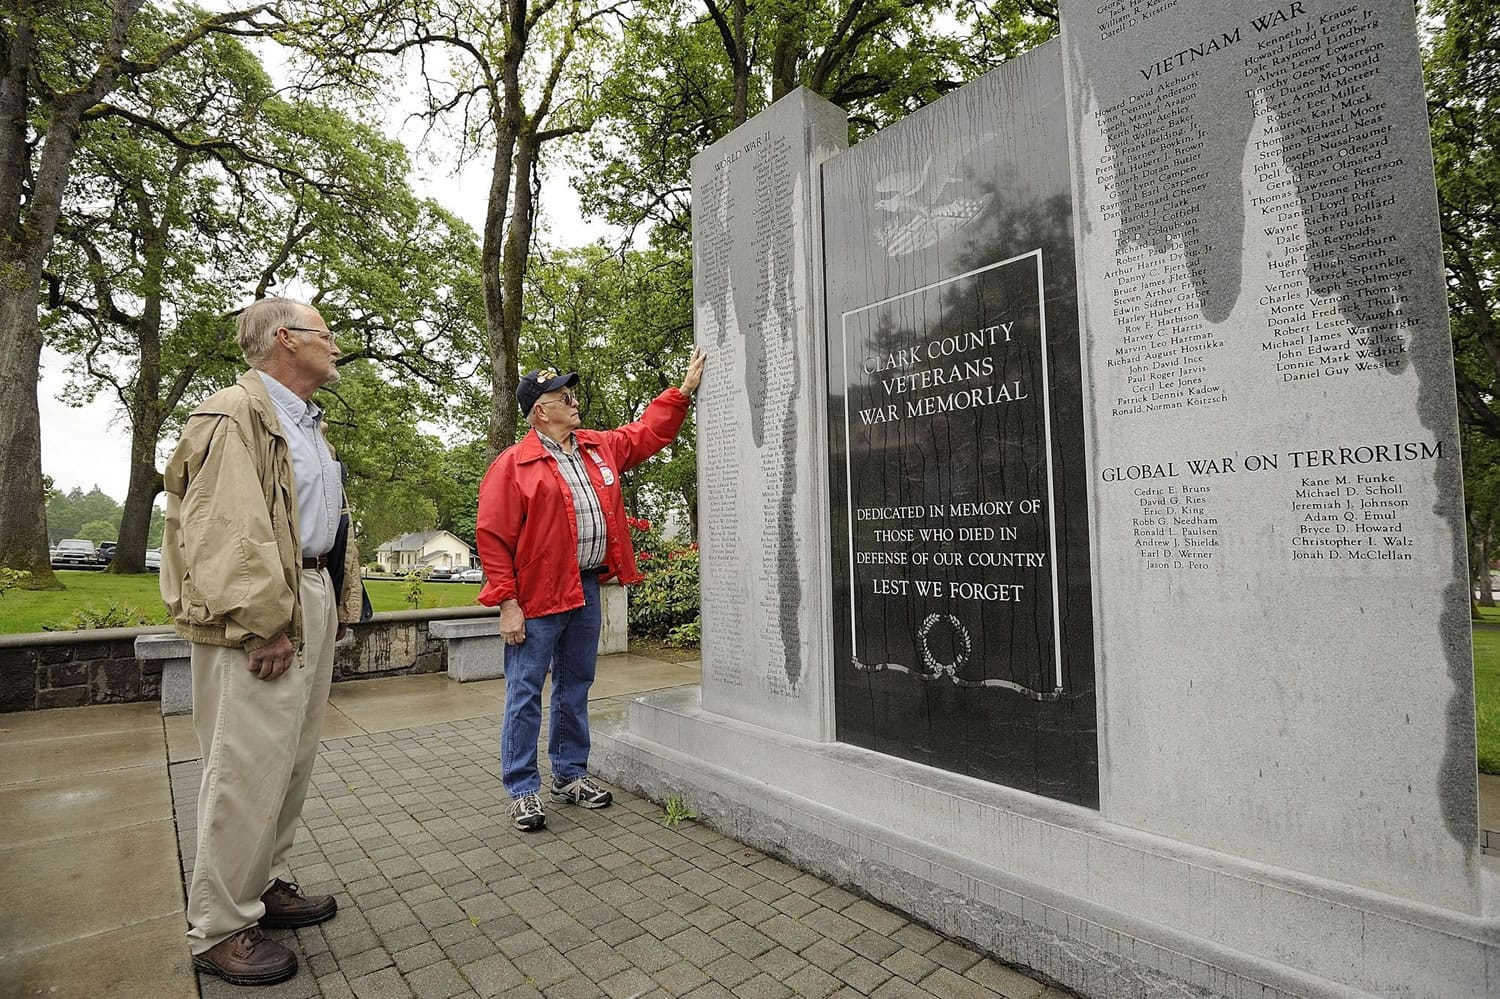 Richard Landis, left, a retired Army officer, and Navy veteran Chuck Jones check the updated Clark County Veterans War Memorial.